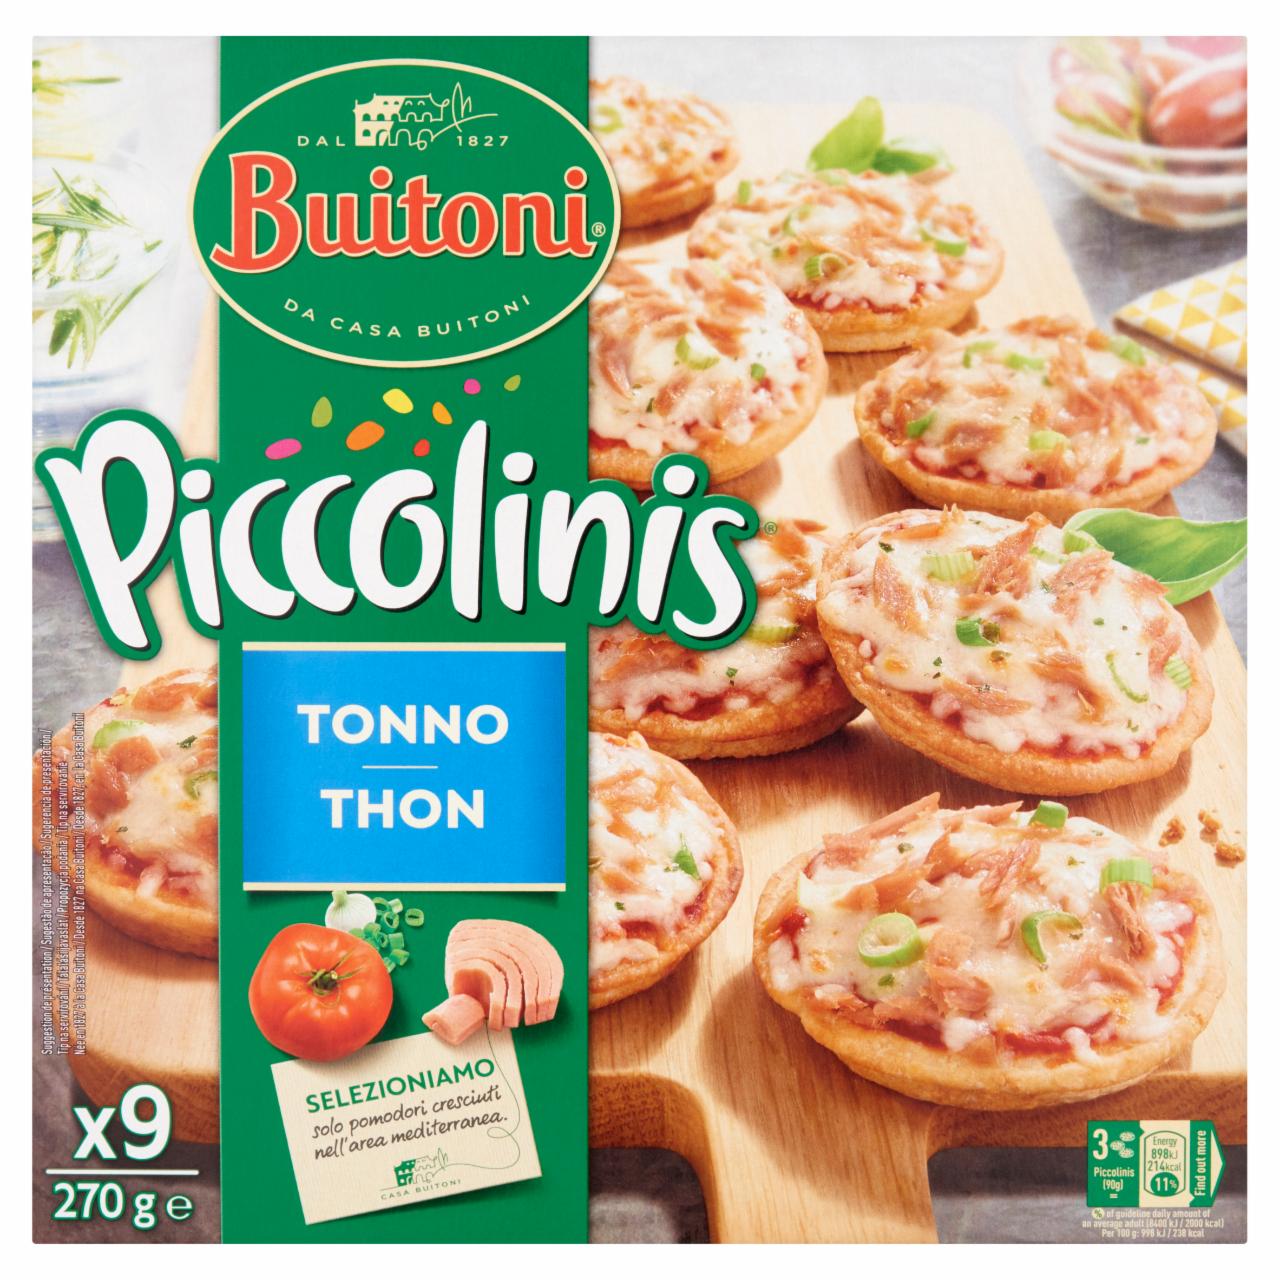 Képek - Buitoni Piccolinis Tonno gyorsfagyasztott mini pizza 9 db 270 g